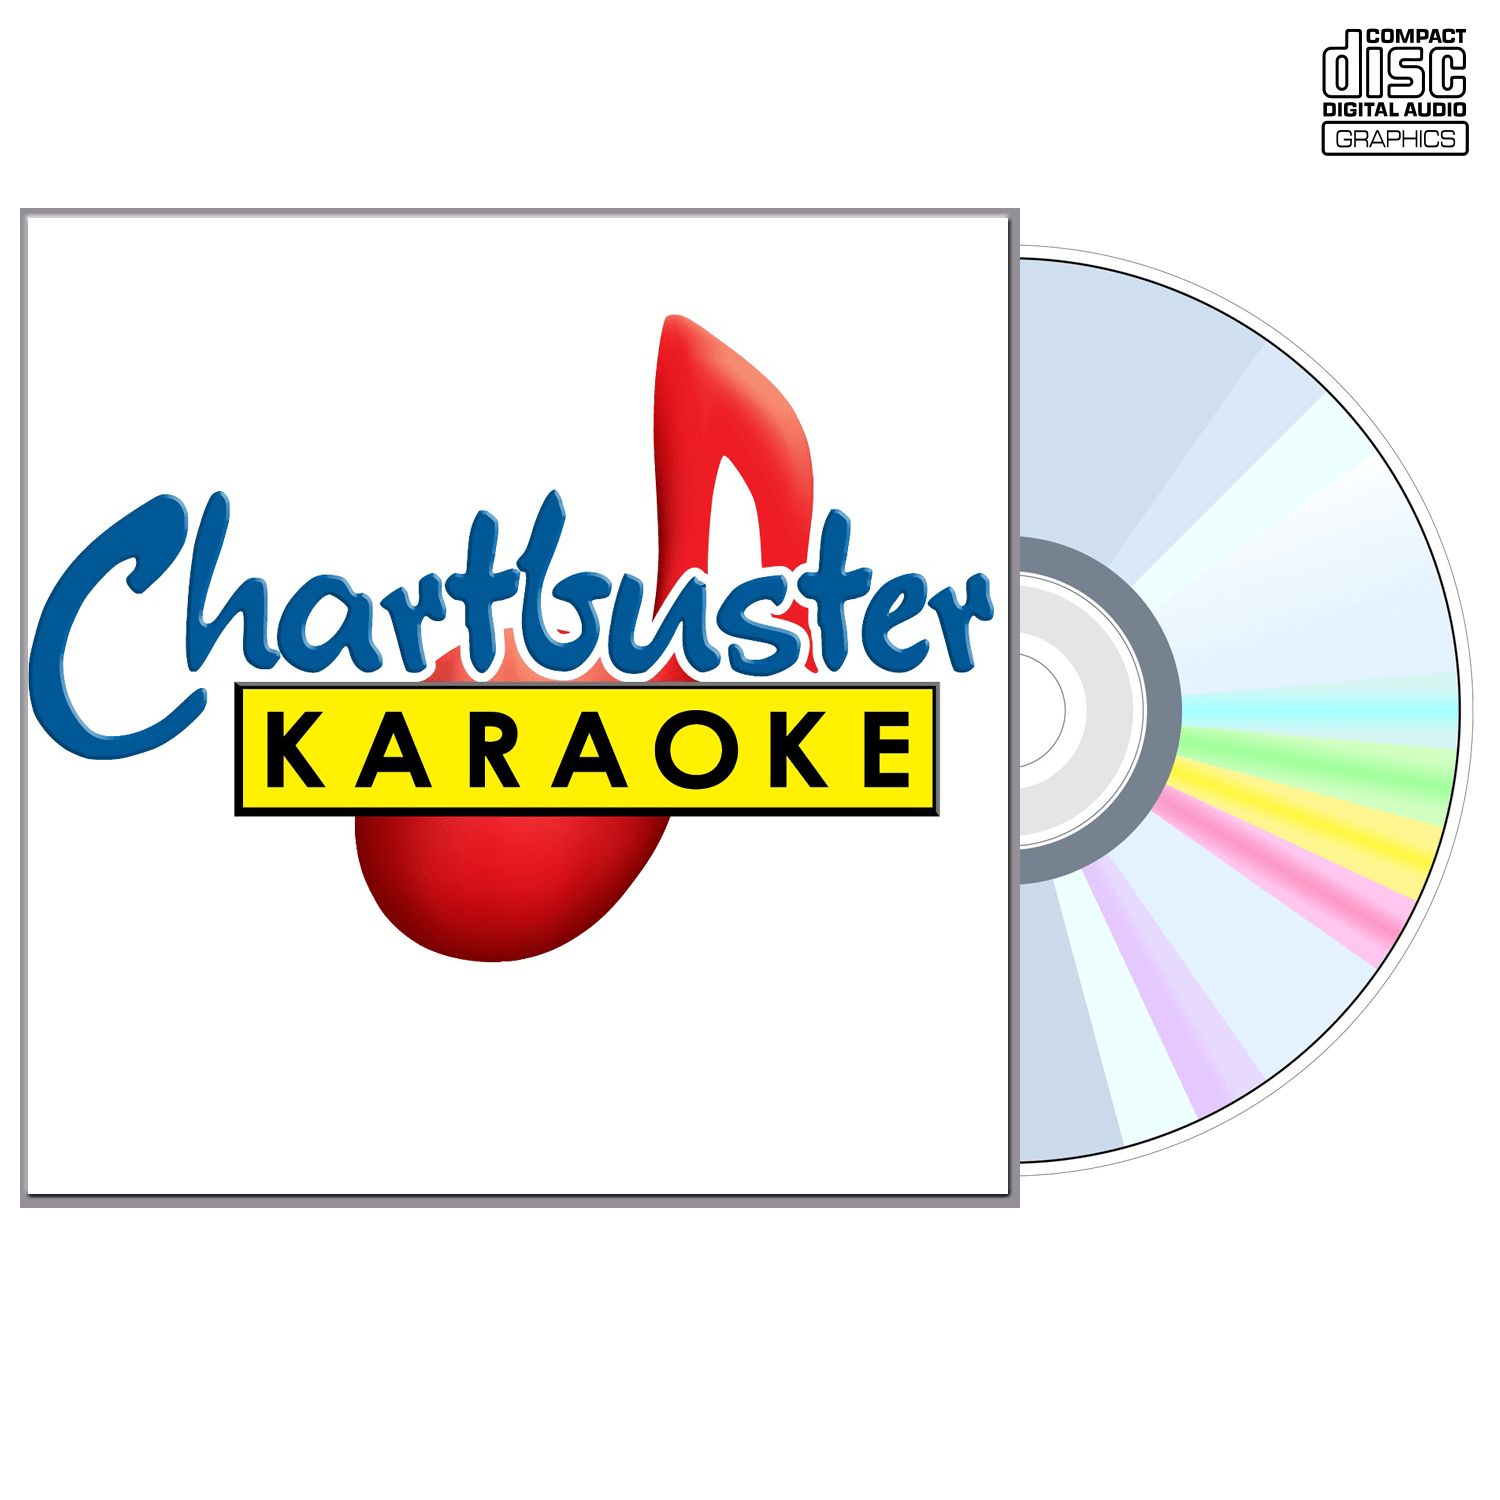 Travis Tritt Vol 1- CD+G - Chartbuster Karaoke - Karaoke Home Entertainment